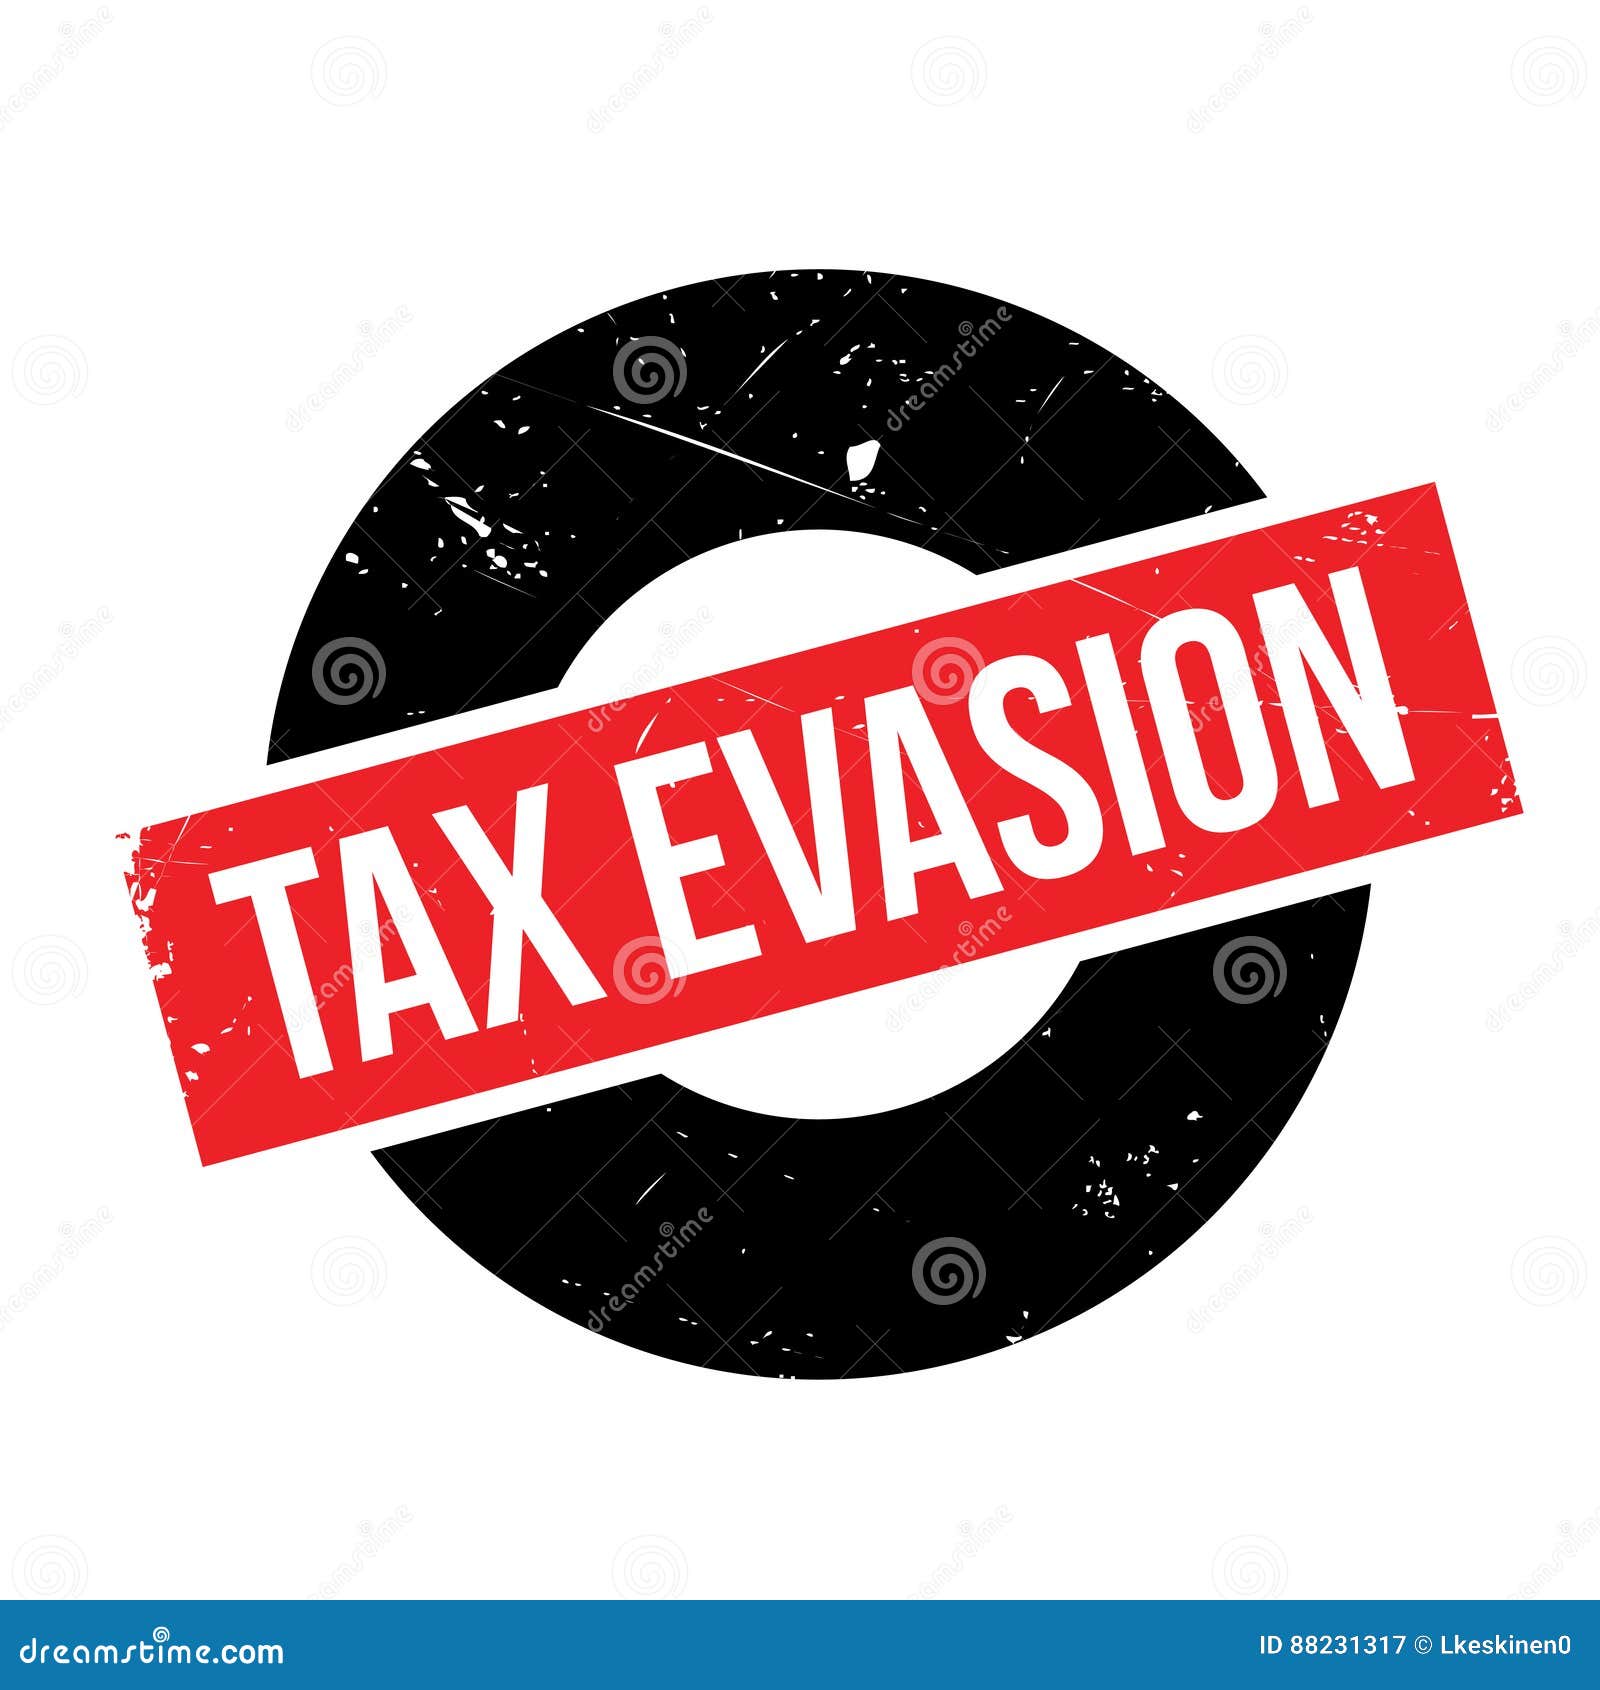 tax evasion rubber stamp